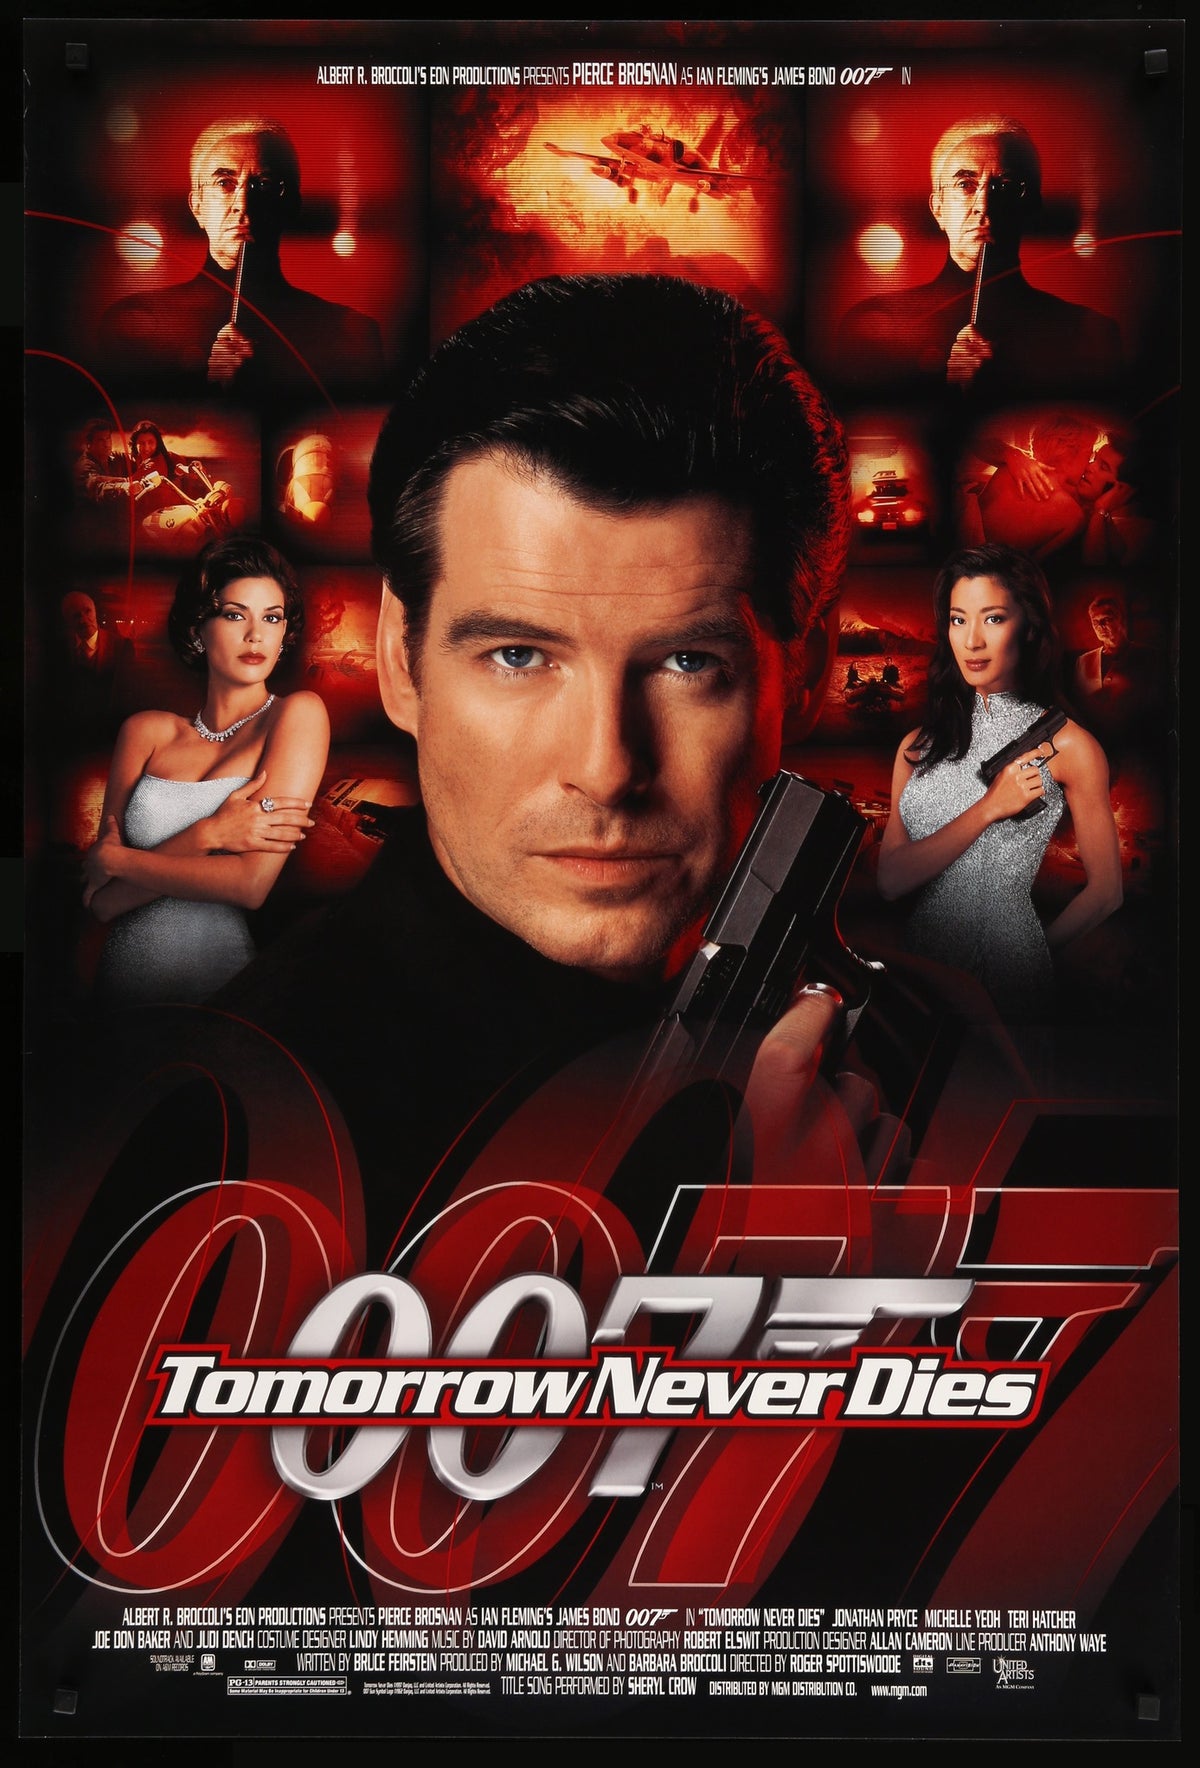 Tomorrow Never Dies (1997) original movie poster for sale at Original Film Art